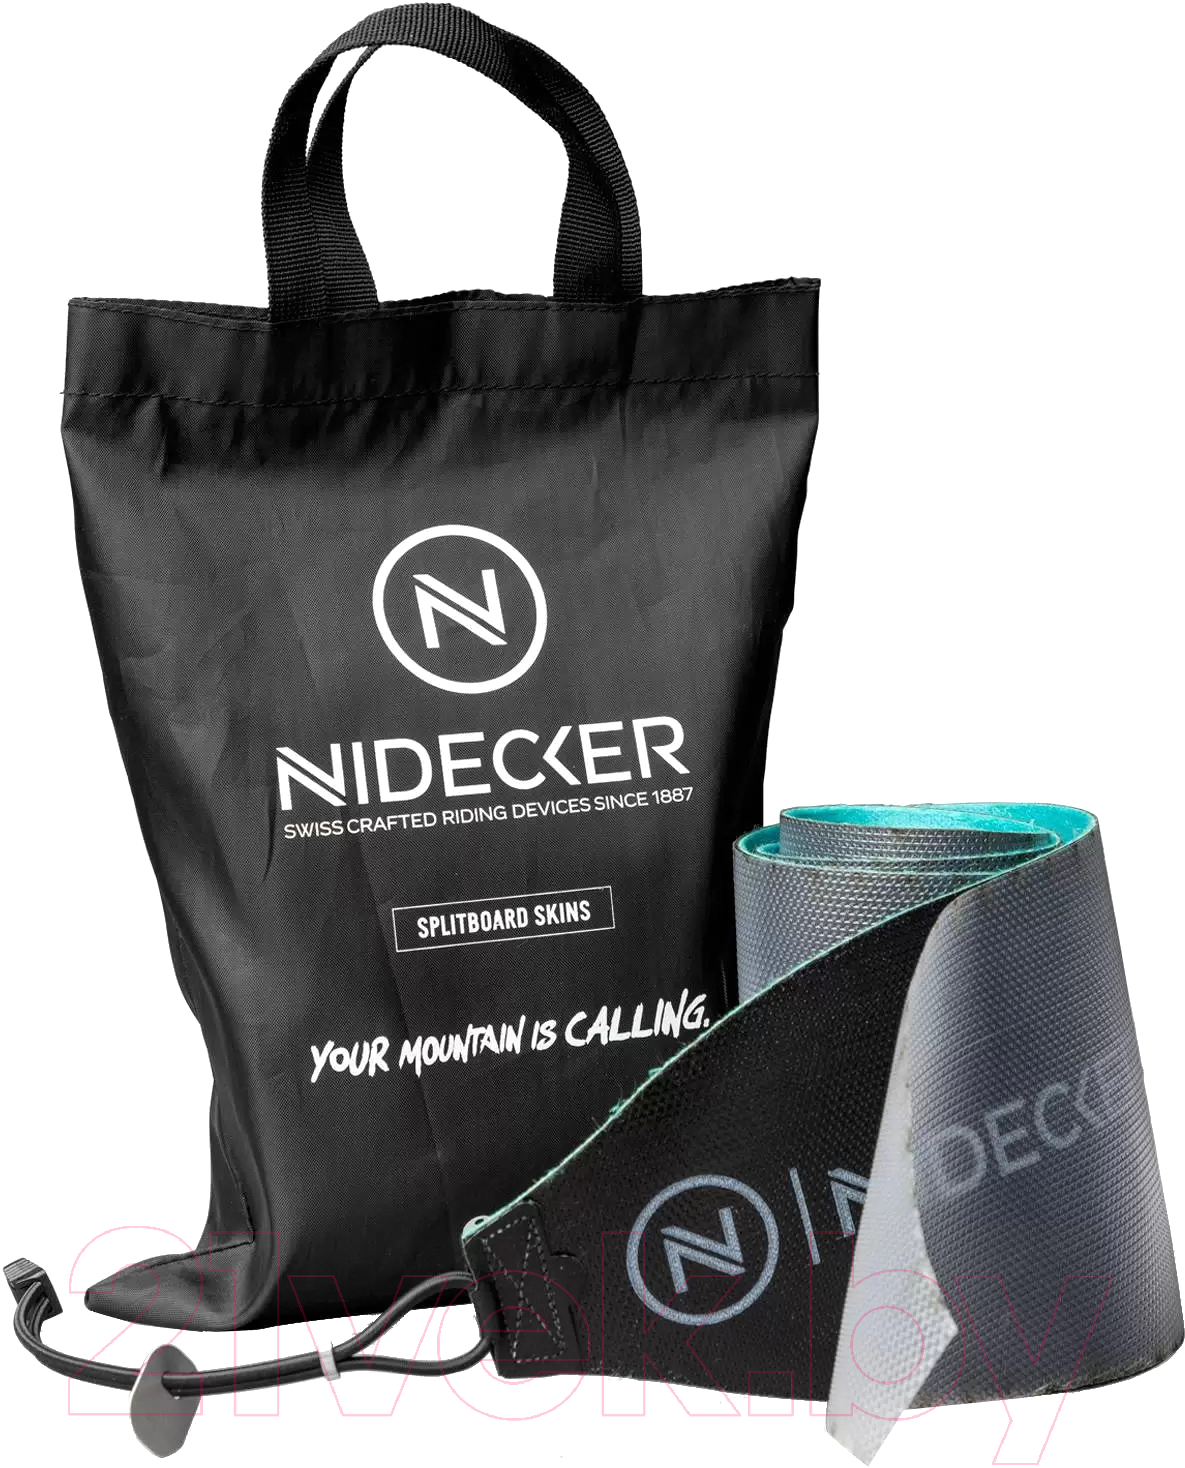 Камус для сплитборда Nidecker 2022-23 Escape Split Skin